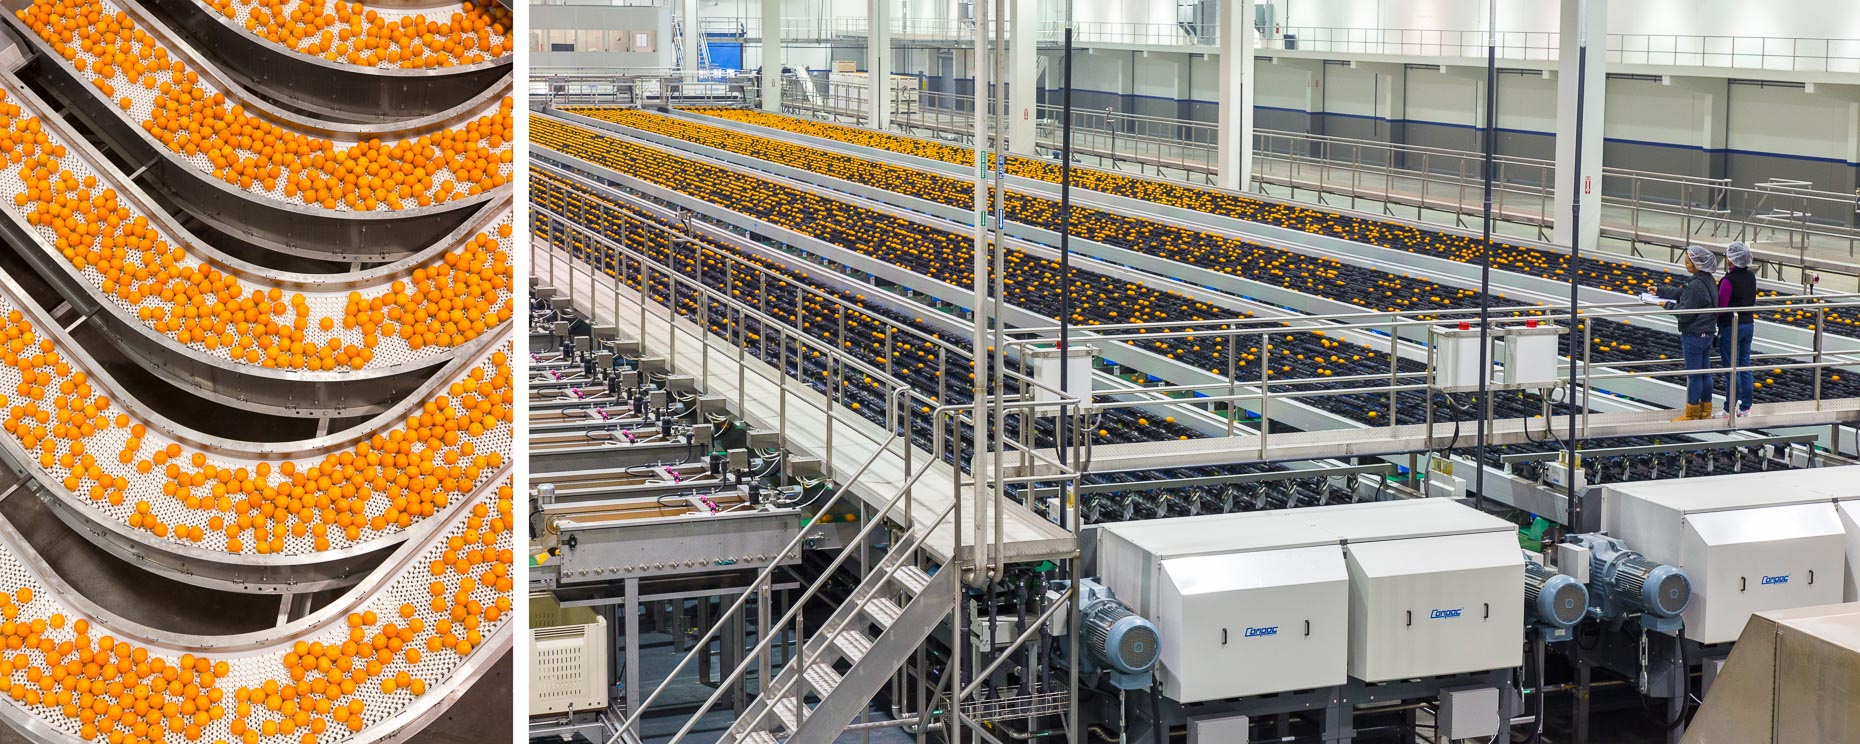 Citrus processing plant conveyer belt. Industrial. David Zaitz Photography.